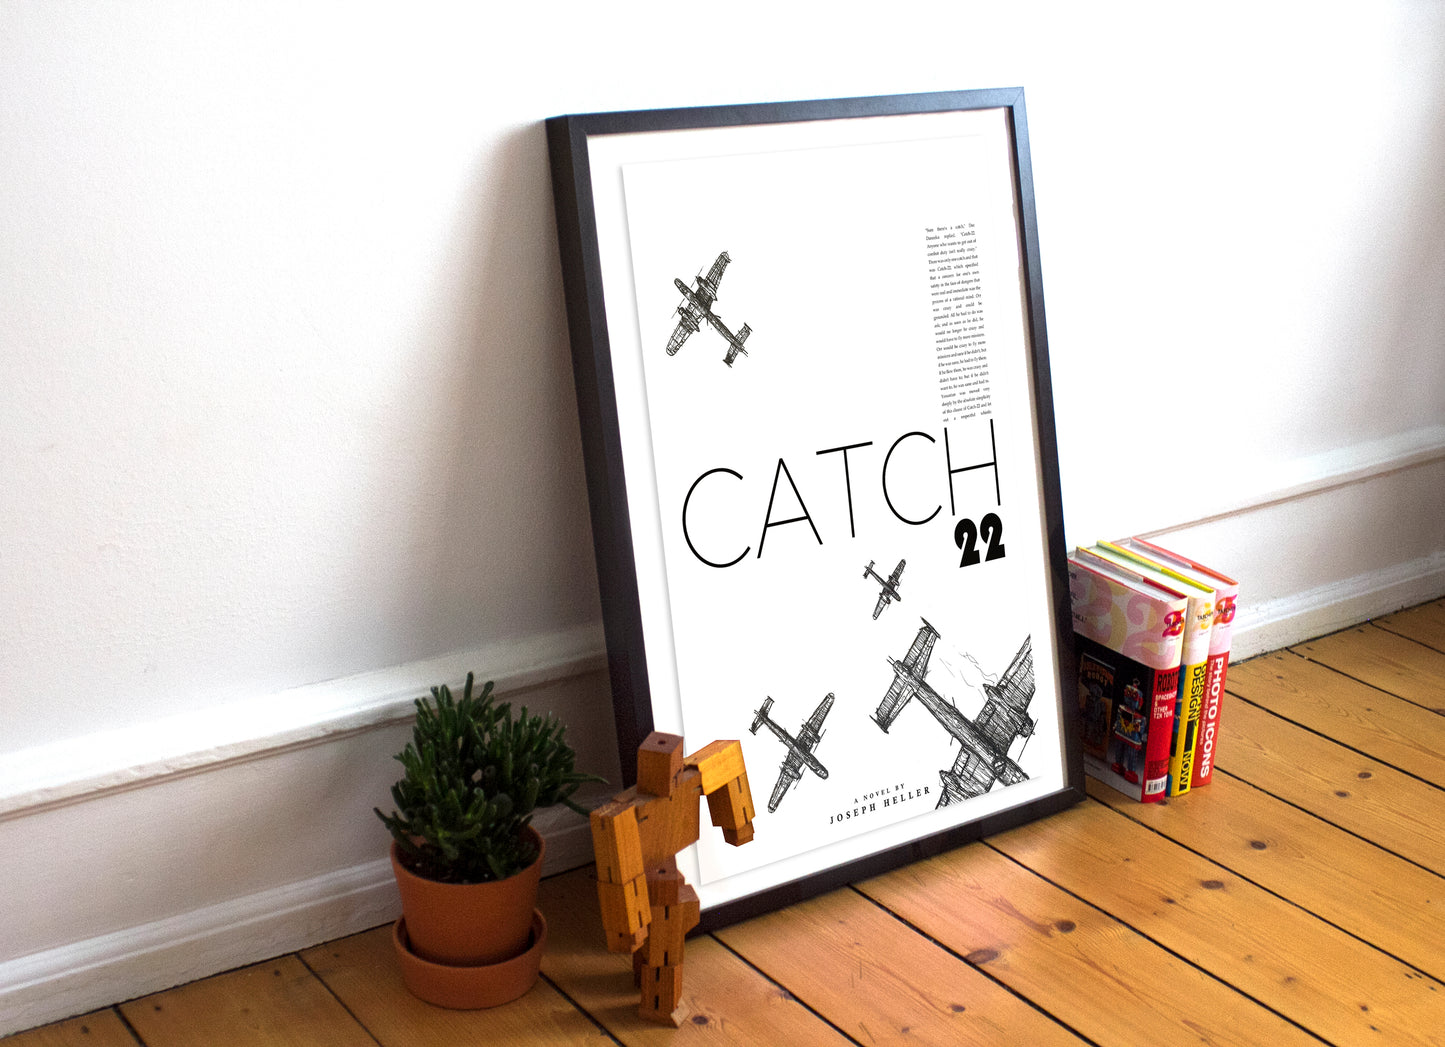 Catch 22 Joseph Heller - Book - Minimalist Movie Poster